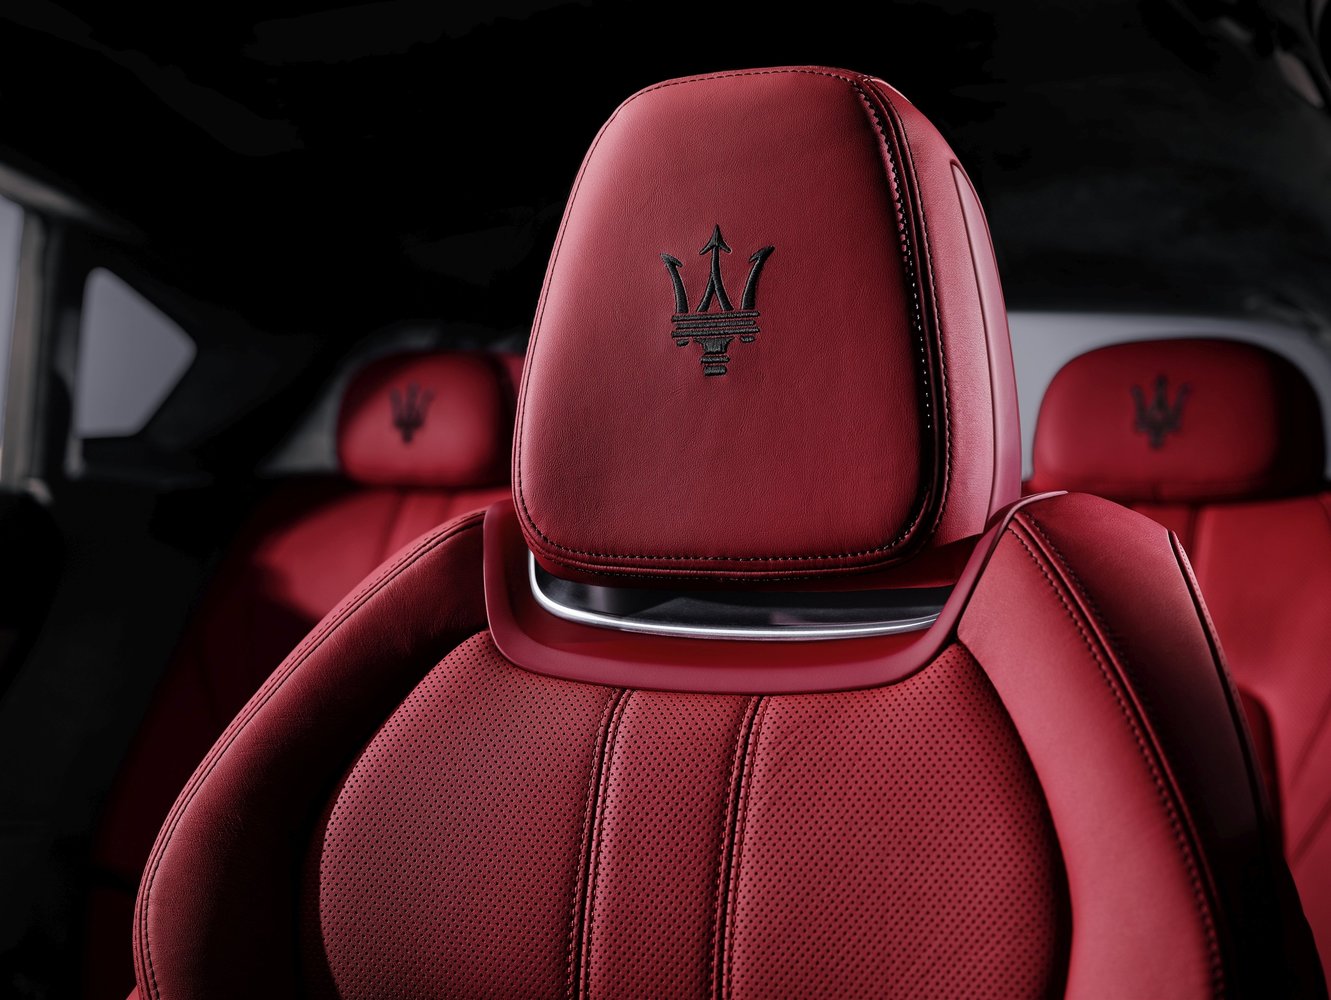 кроссовер Maserati Levante 2016г выпуска модификация 3.0 AT (275 л.с.) 4×4